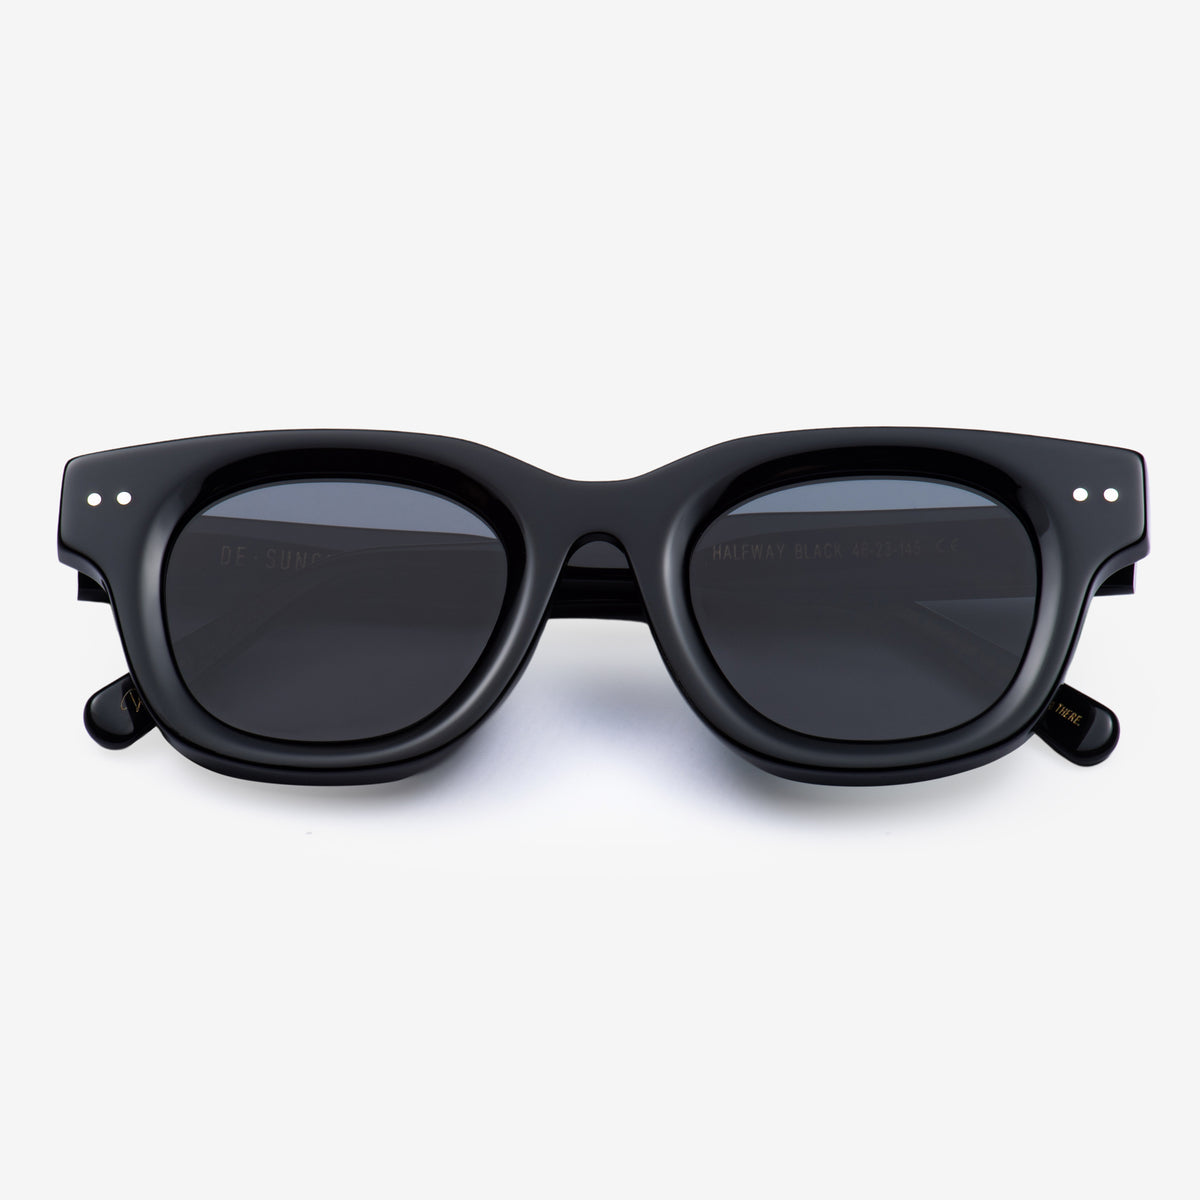 De-sunglasses|Halfway black